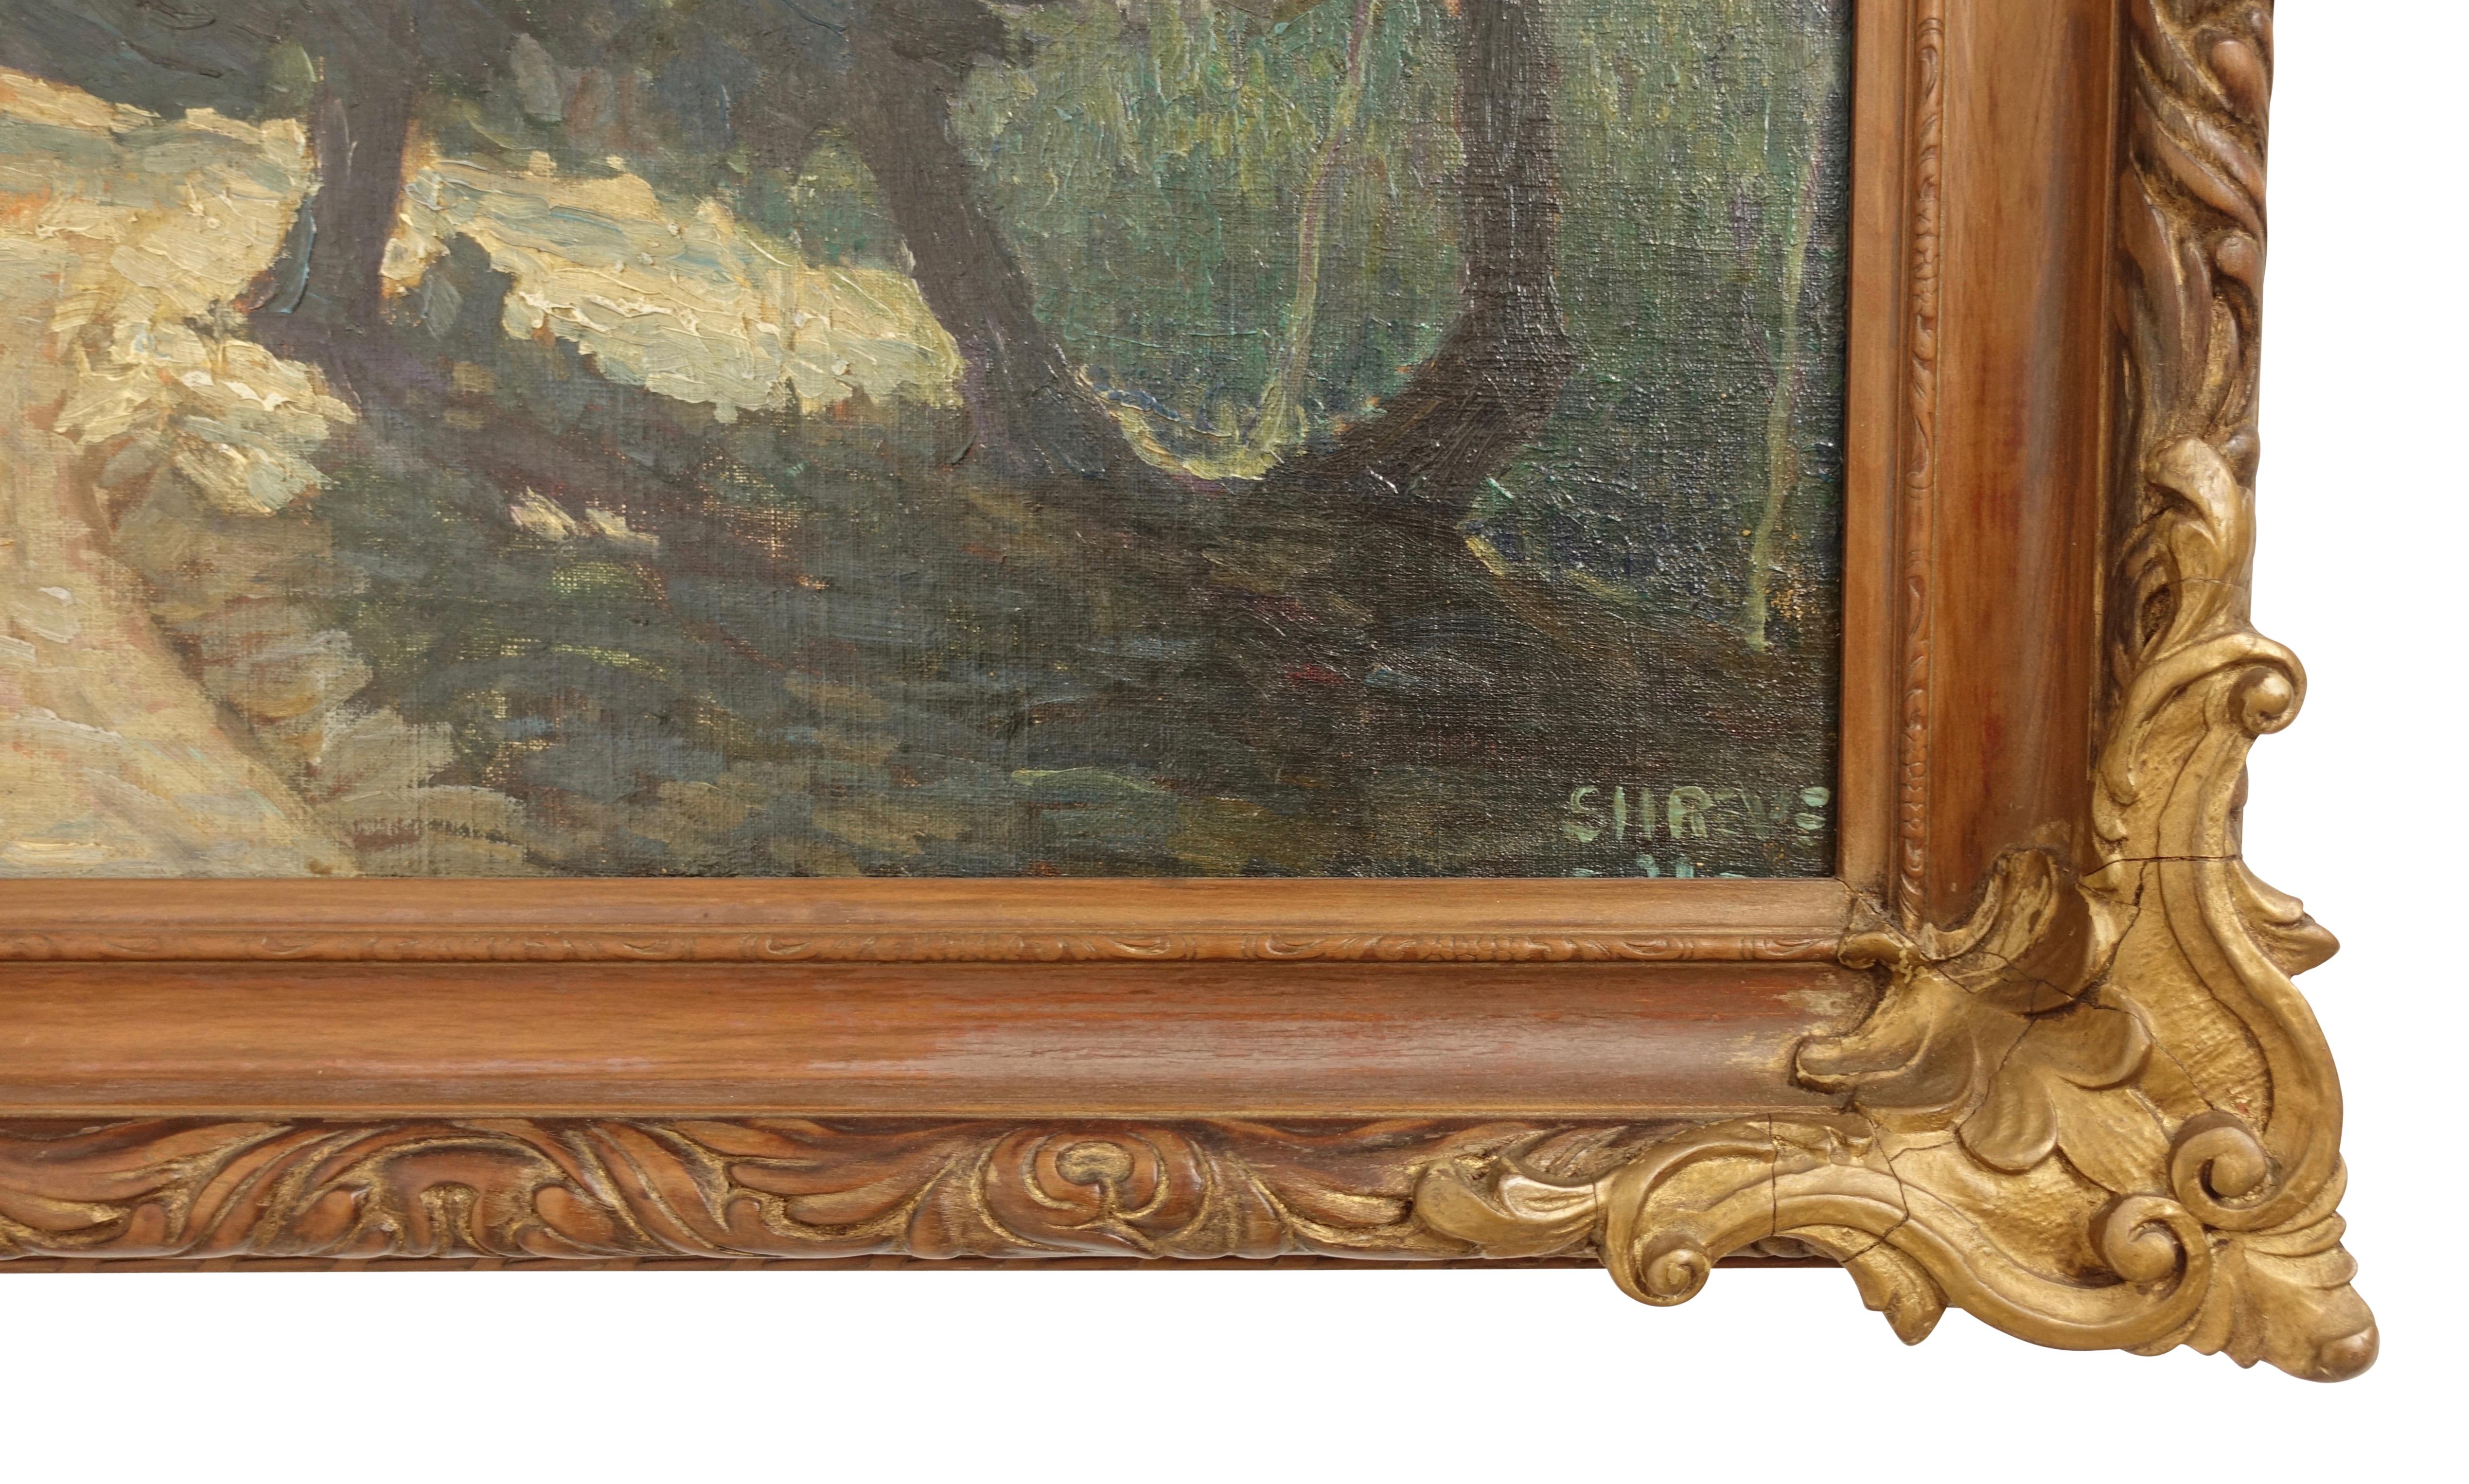 20th Century Impressionist Landscape Painting, Signed Shreve 1923 For Sale